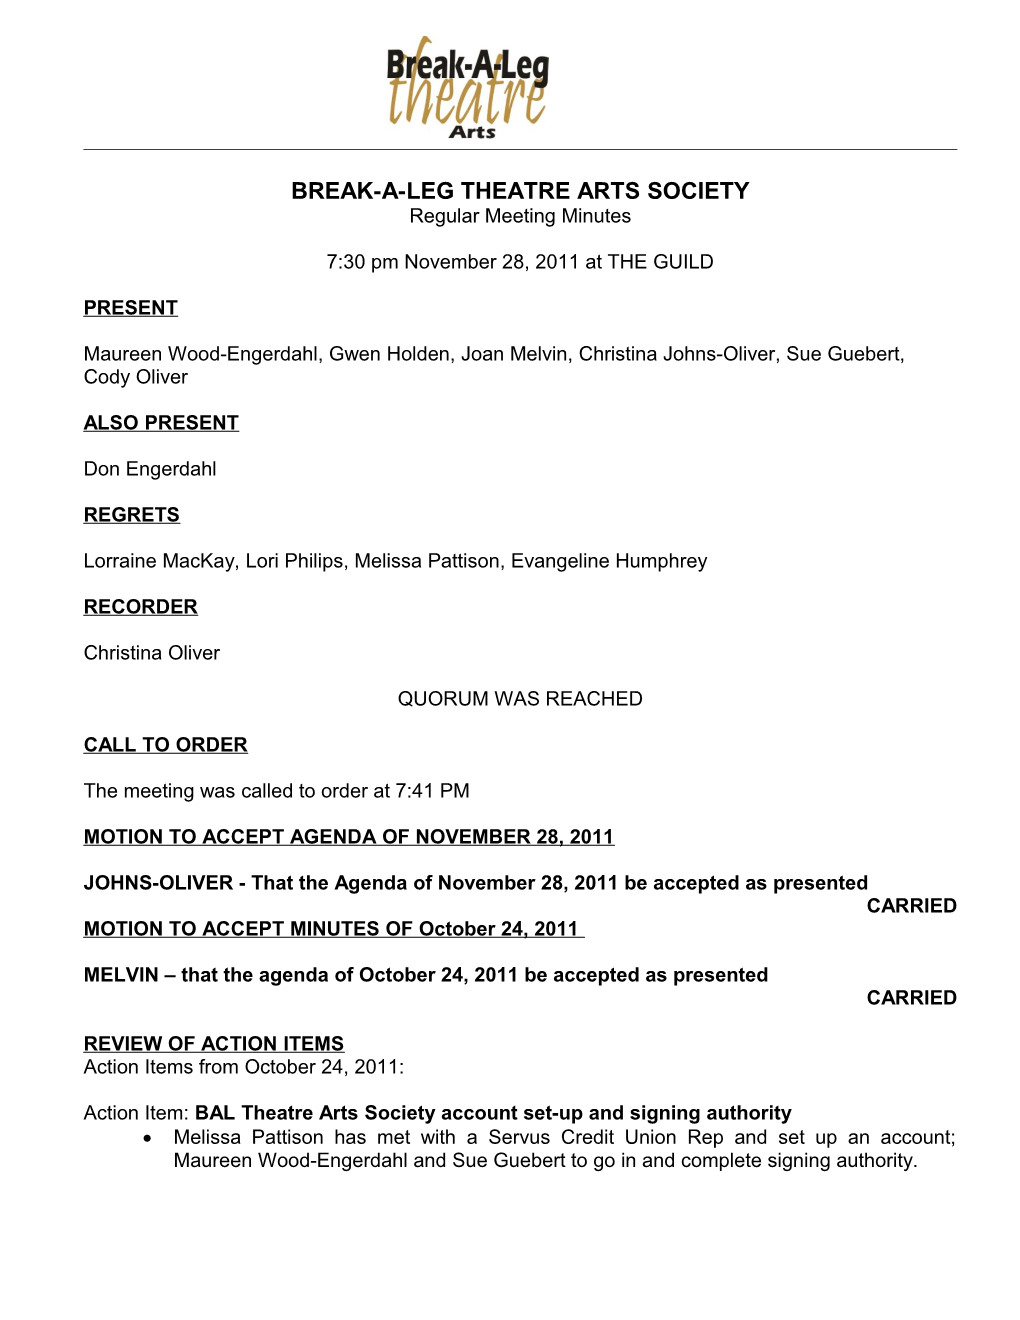 Break-A-Leg Theatre Arts Society